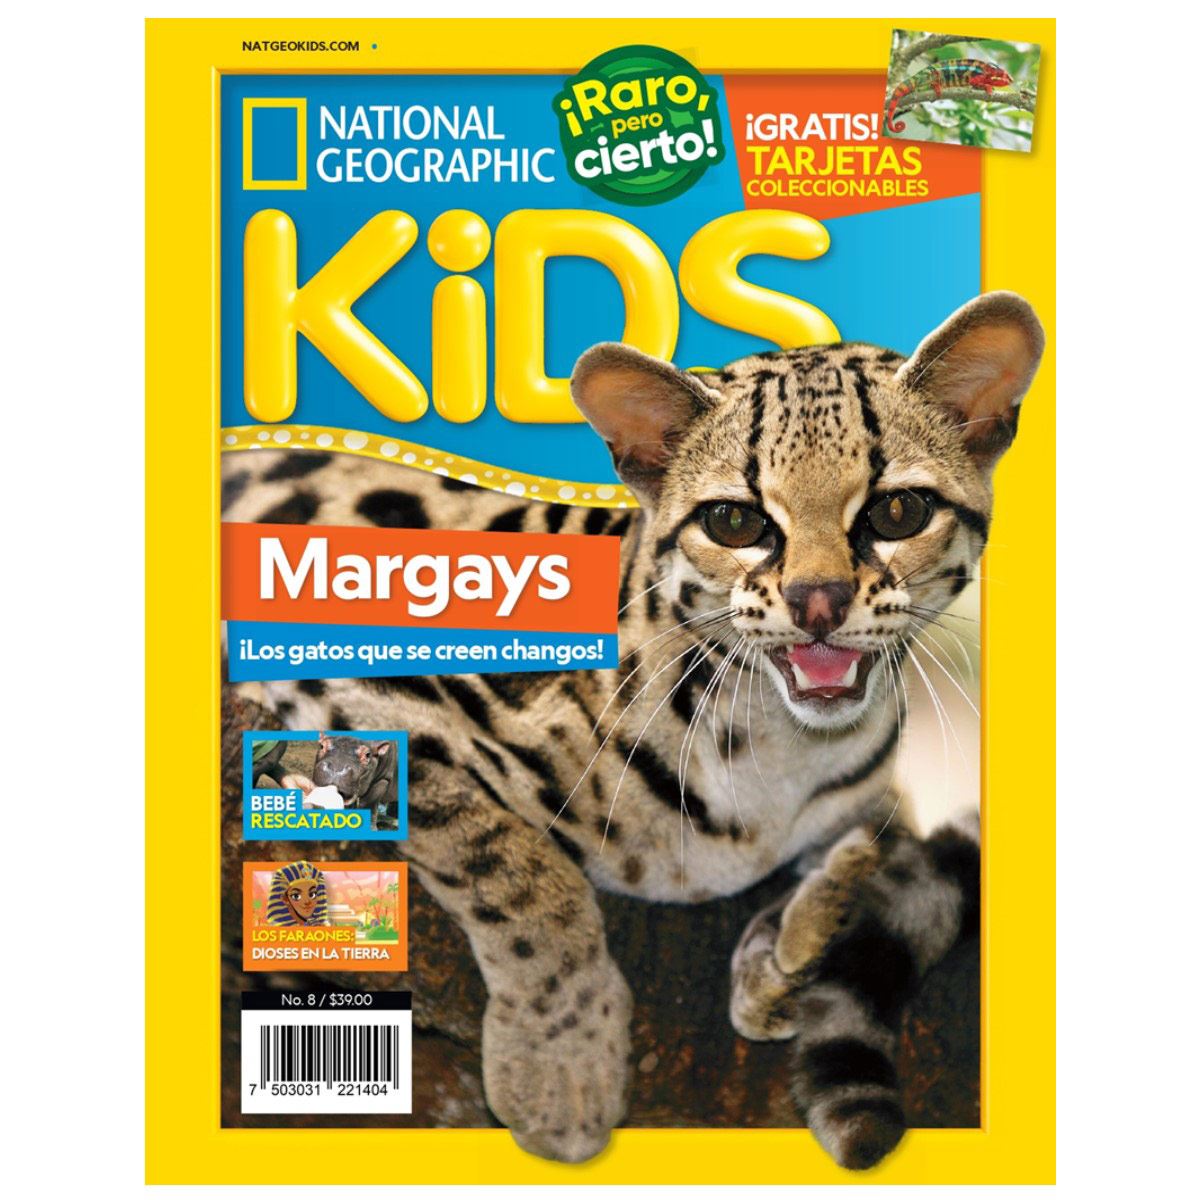 National Geographic Kids N.13 Panini Revista NatGeo Kids